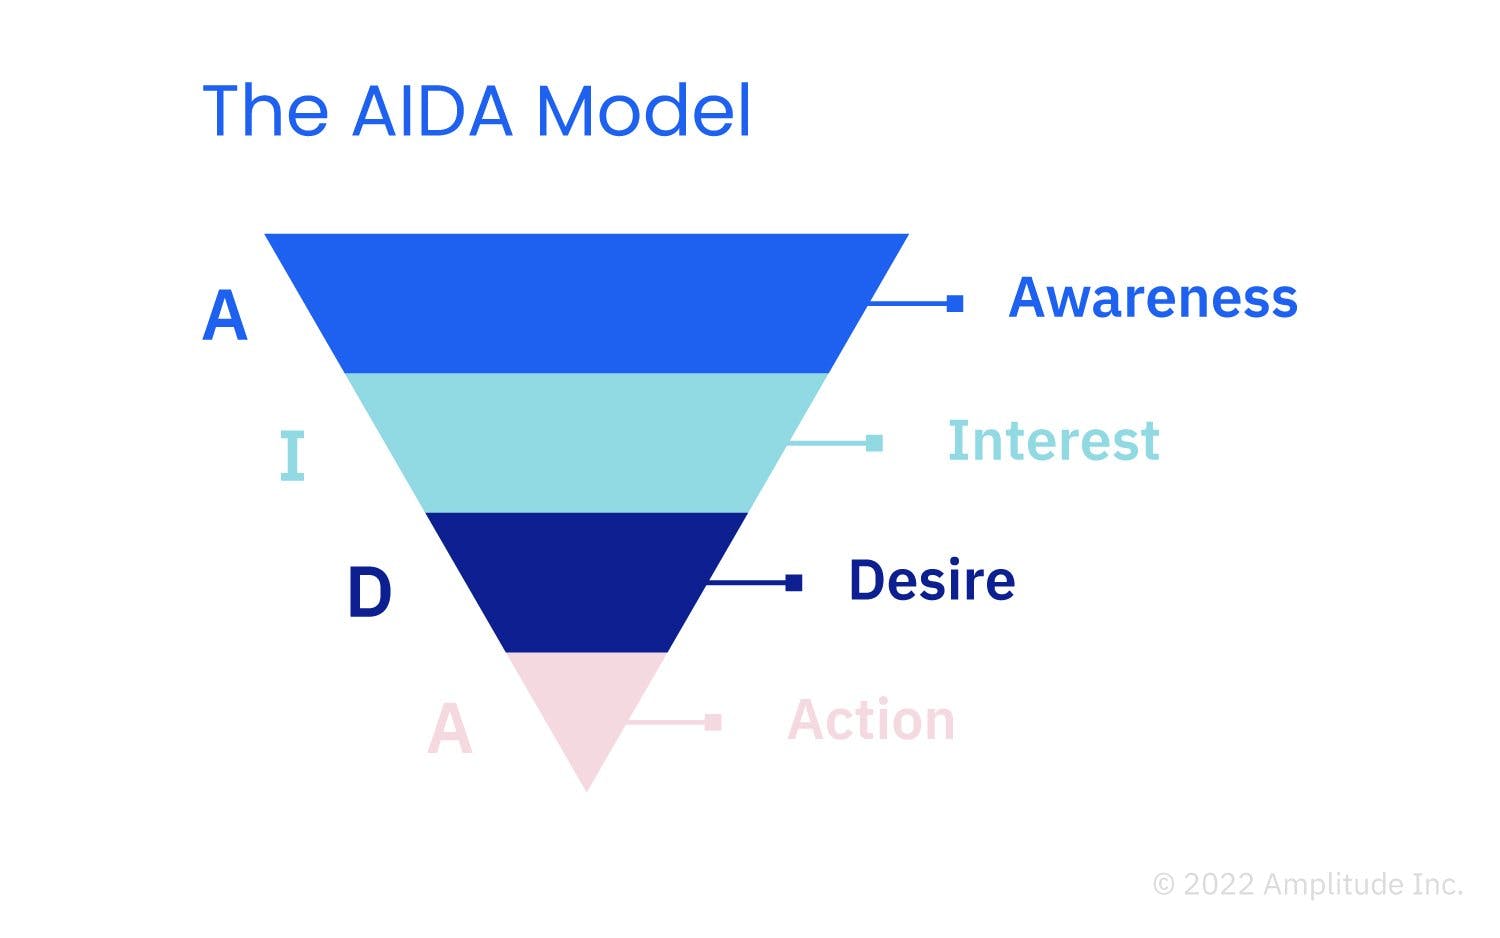 The AIDA model